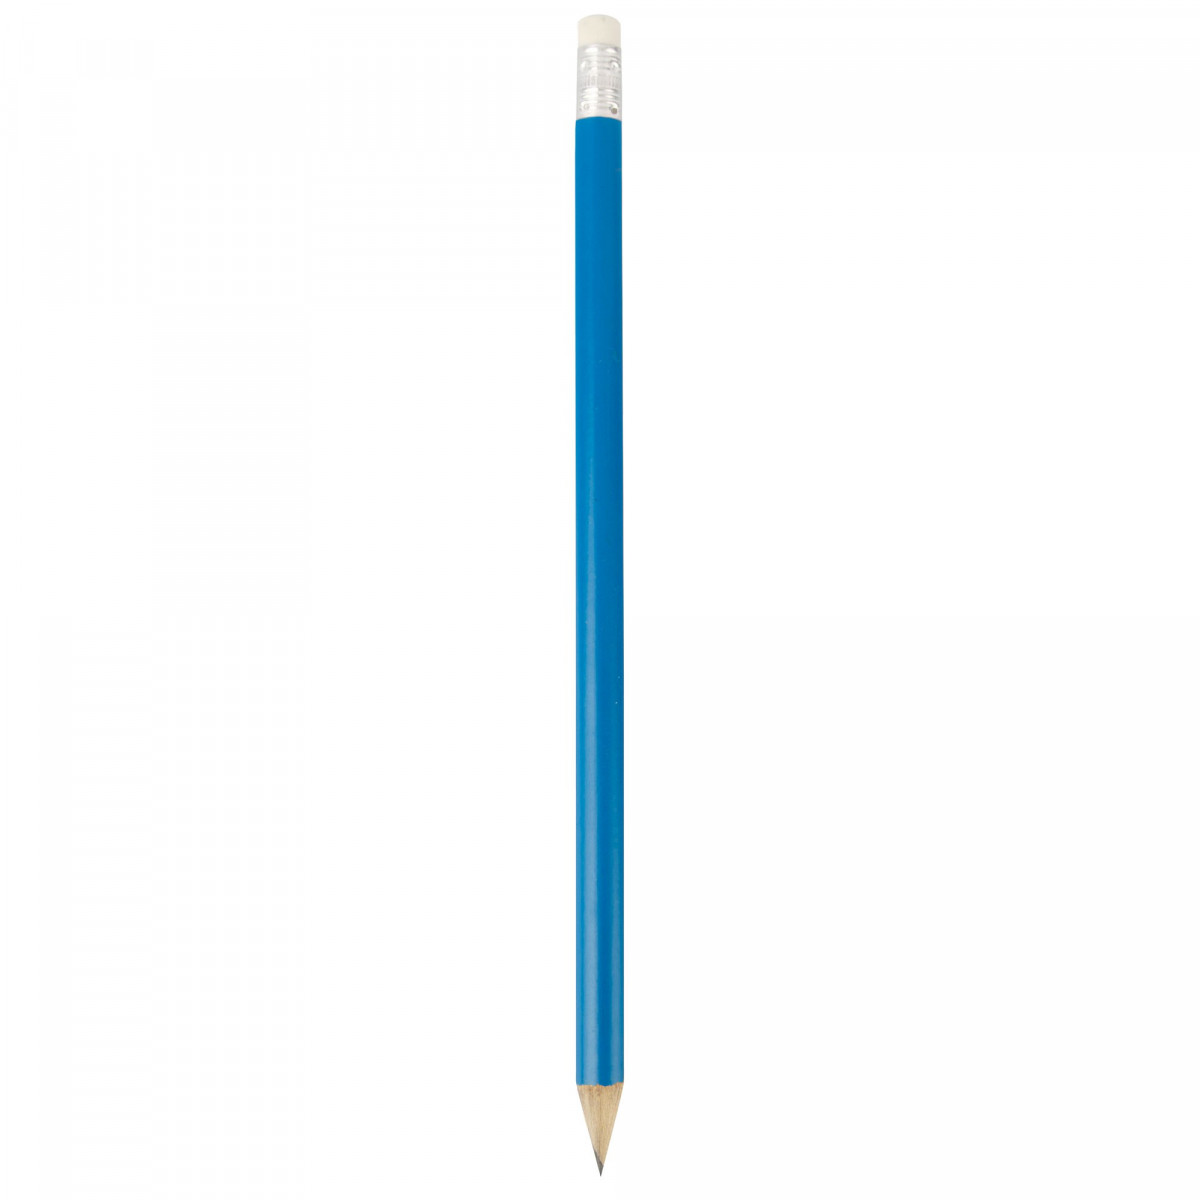 Crayon en bois bleu avec gomme